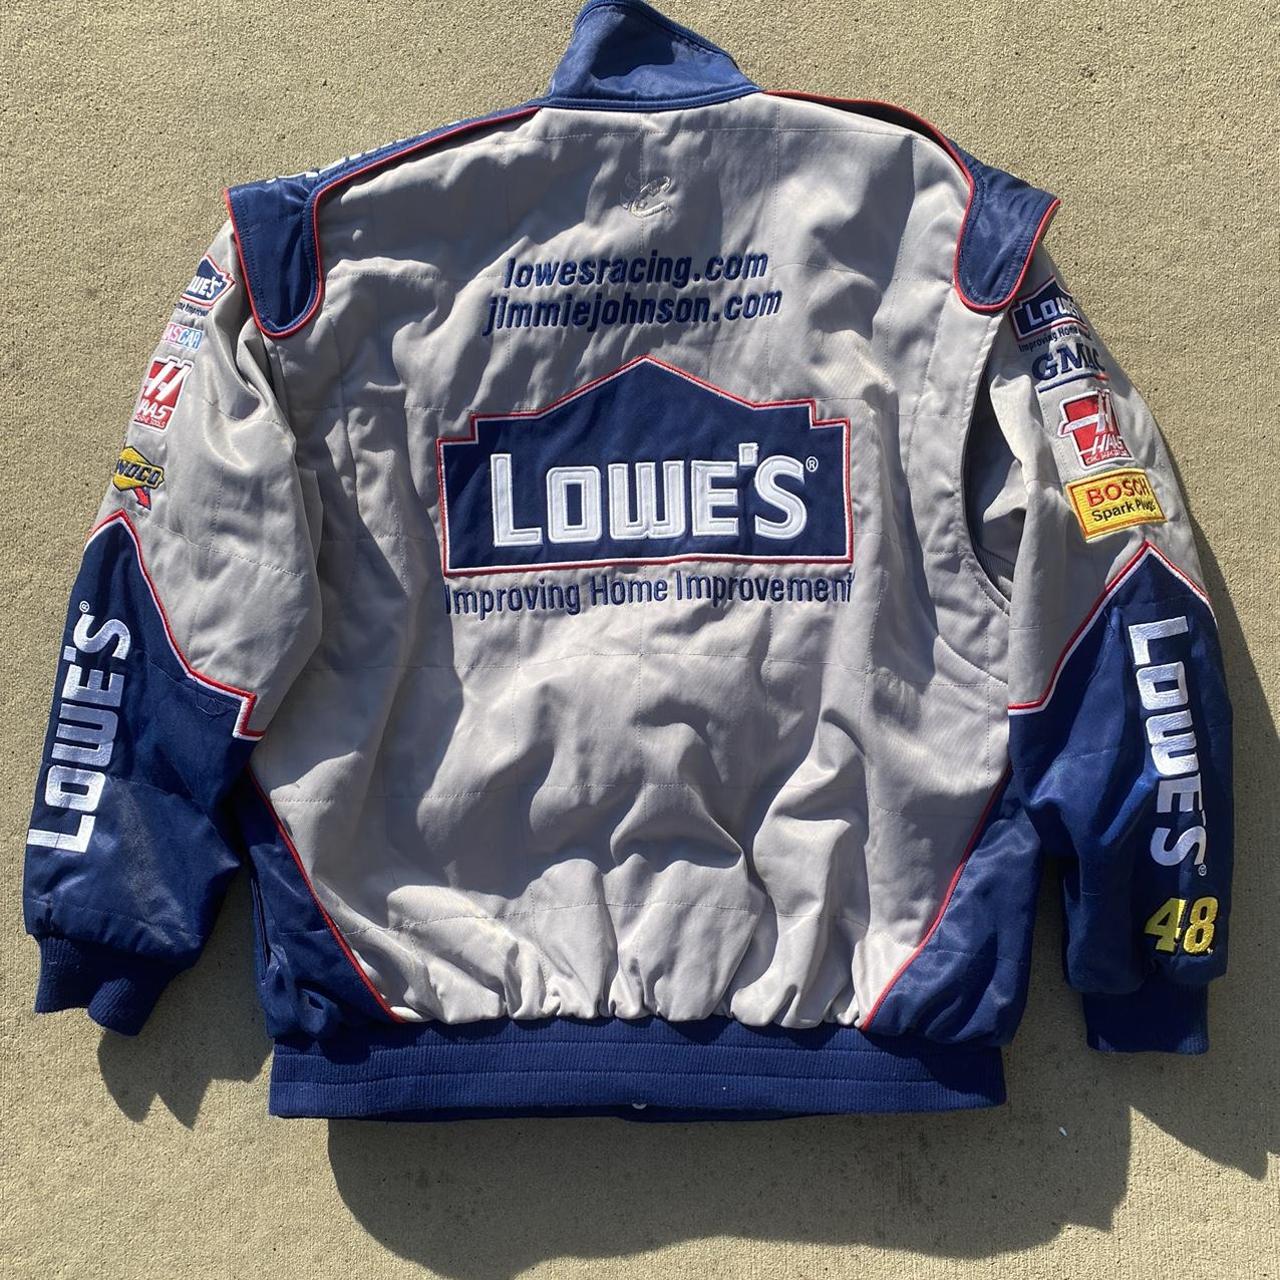 Vintage NASCAR Jimmie Johnson Lowes Racing Jacket....